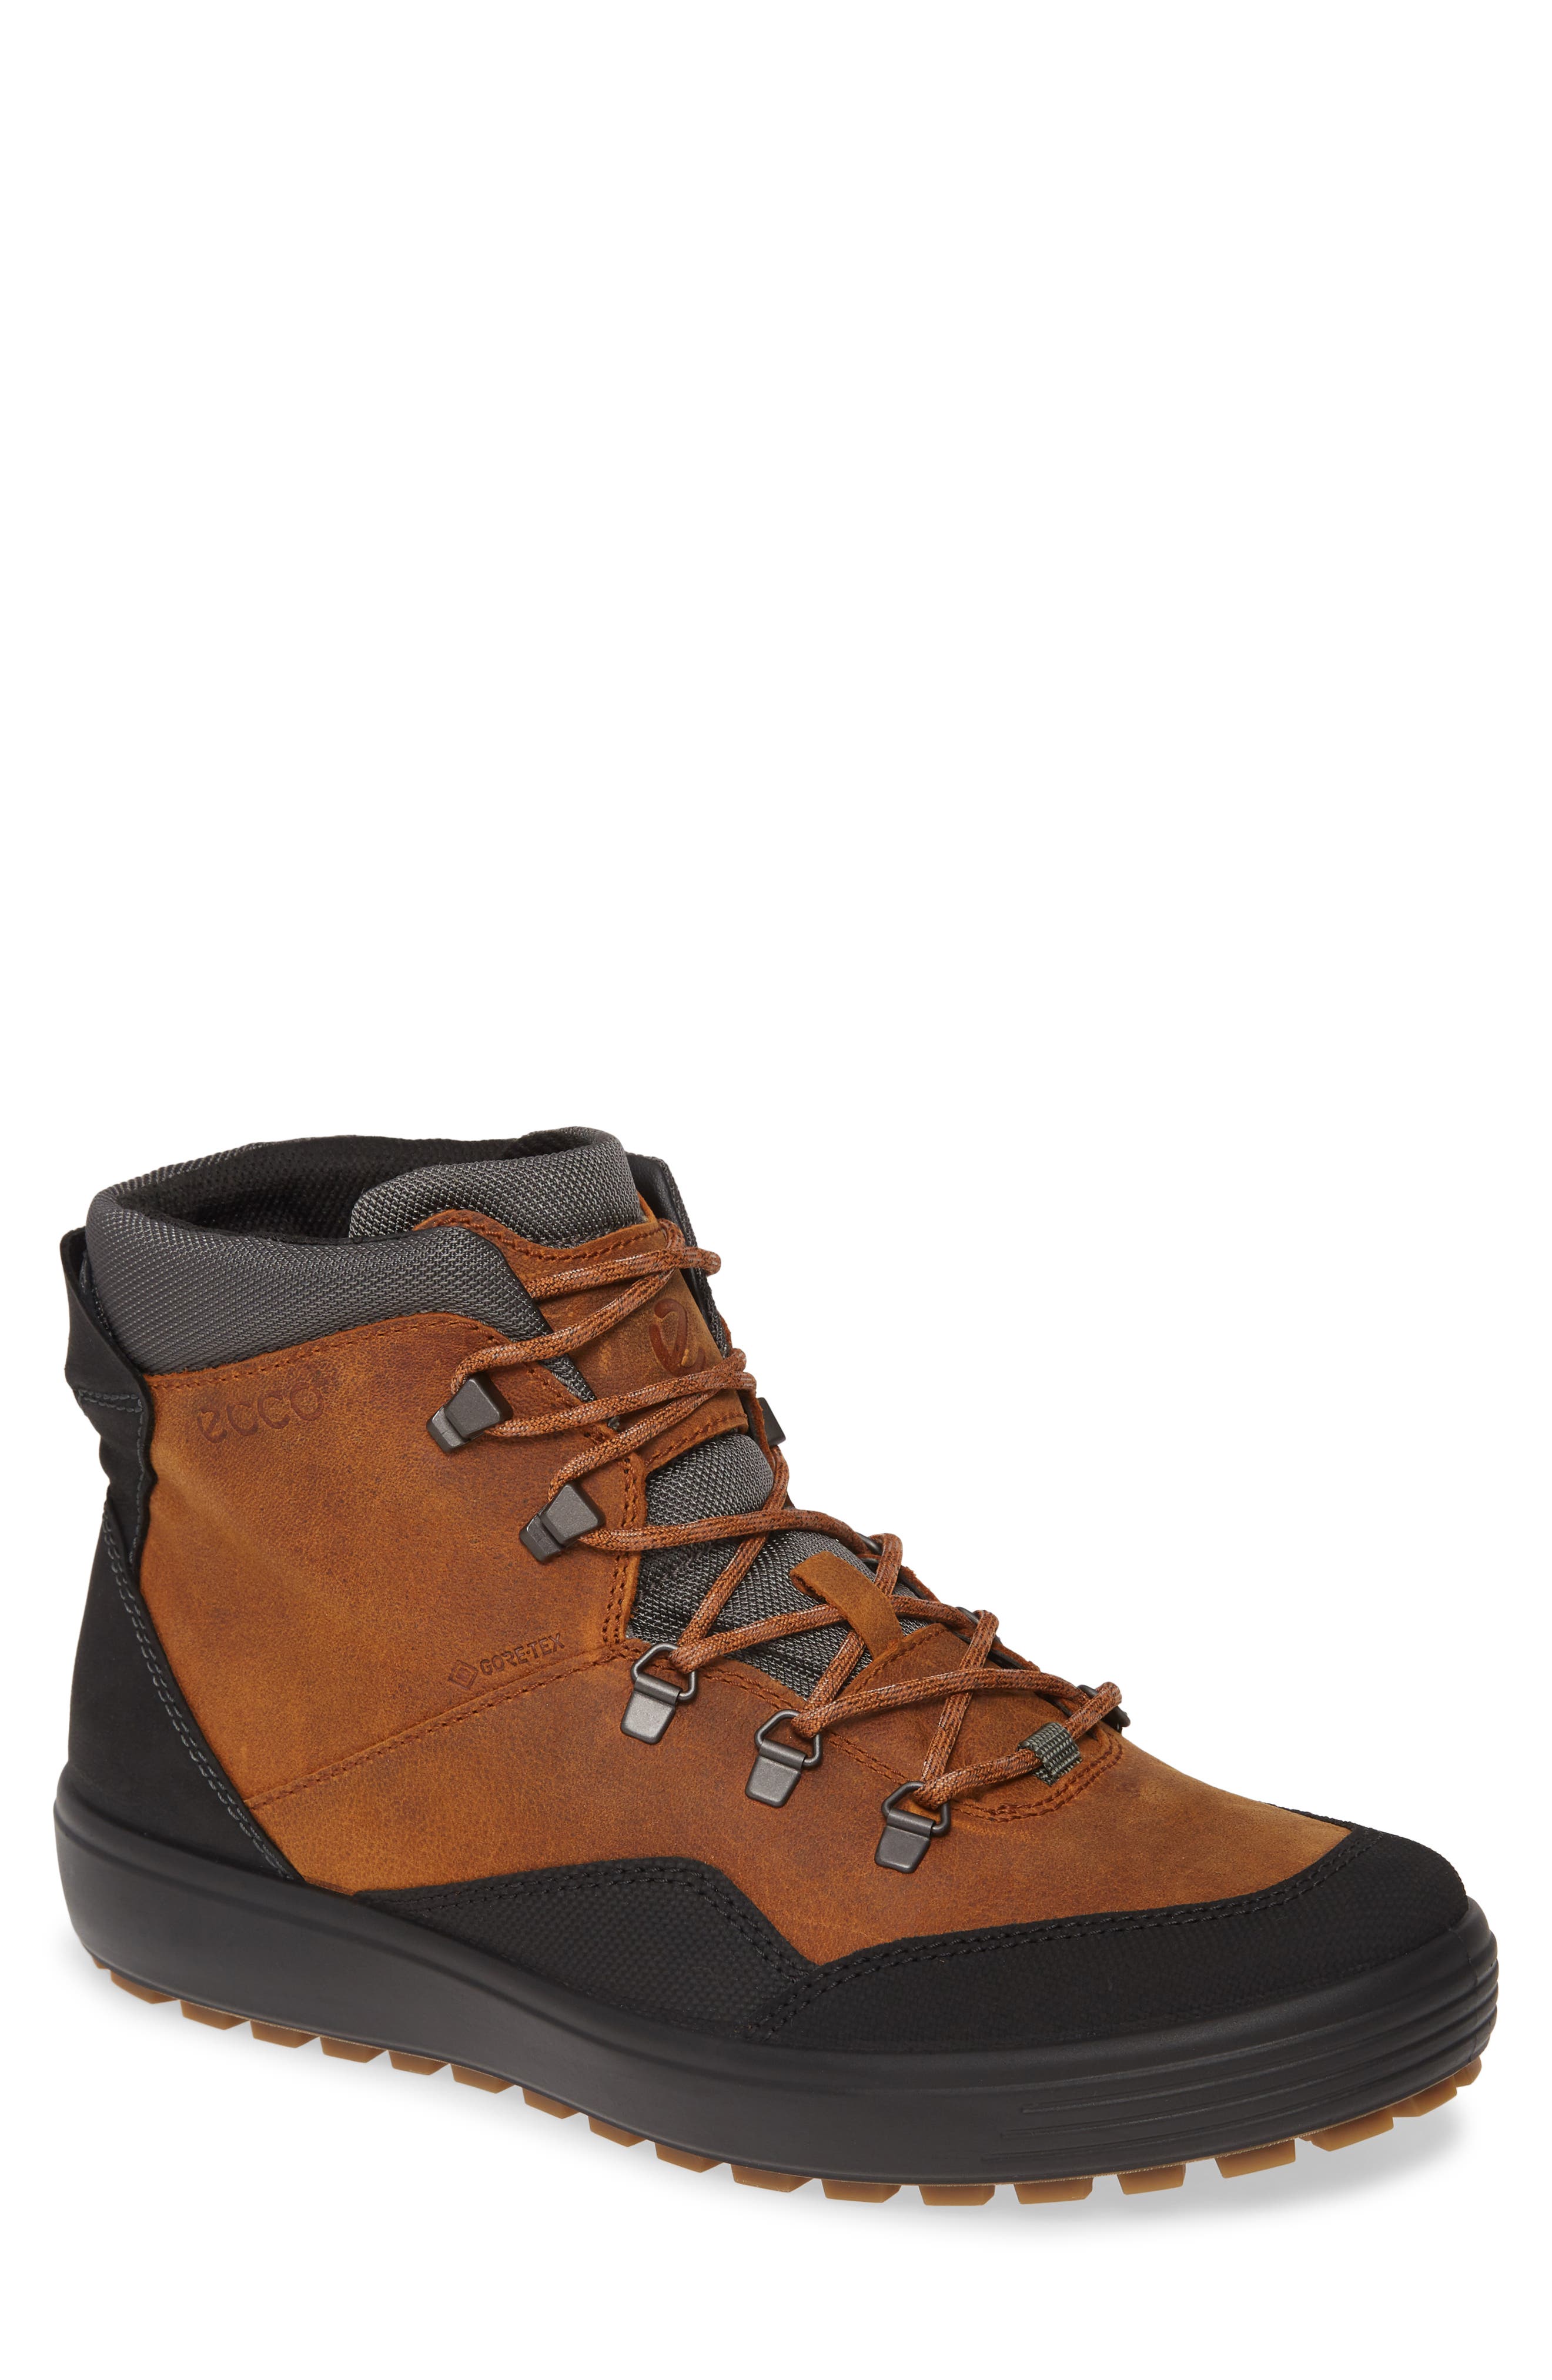 UPC 825840089905 product image for Men's Ecco Soft 7 Tred Terrain High Sneaker, Size 8-8.5US / 42EU - Brown | upcitemdb.com